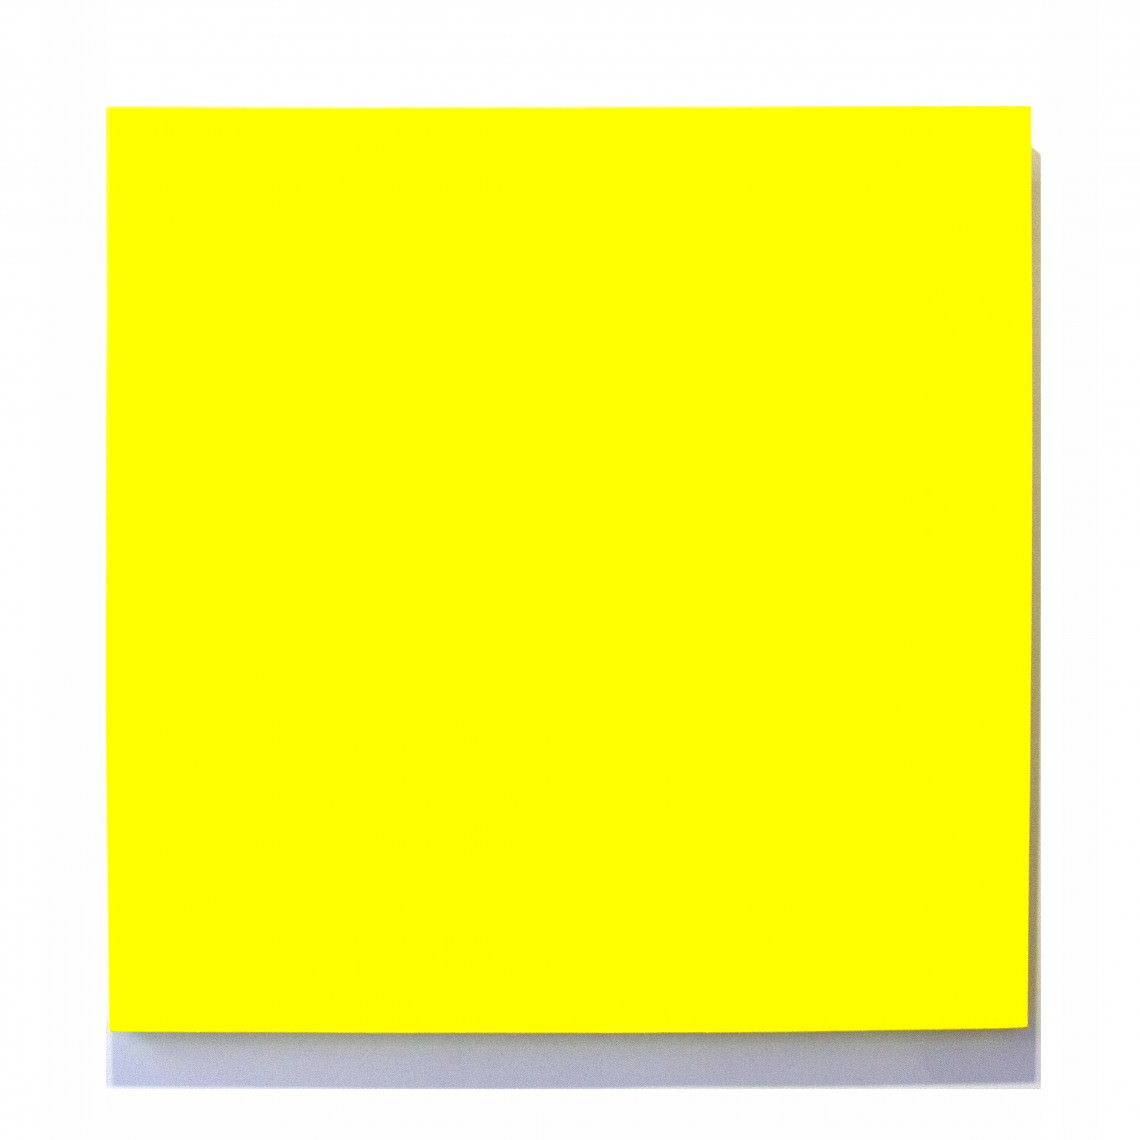  - Monochrome jaune